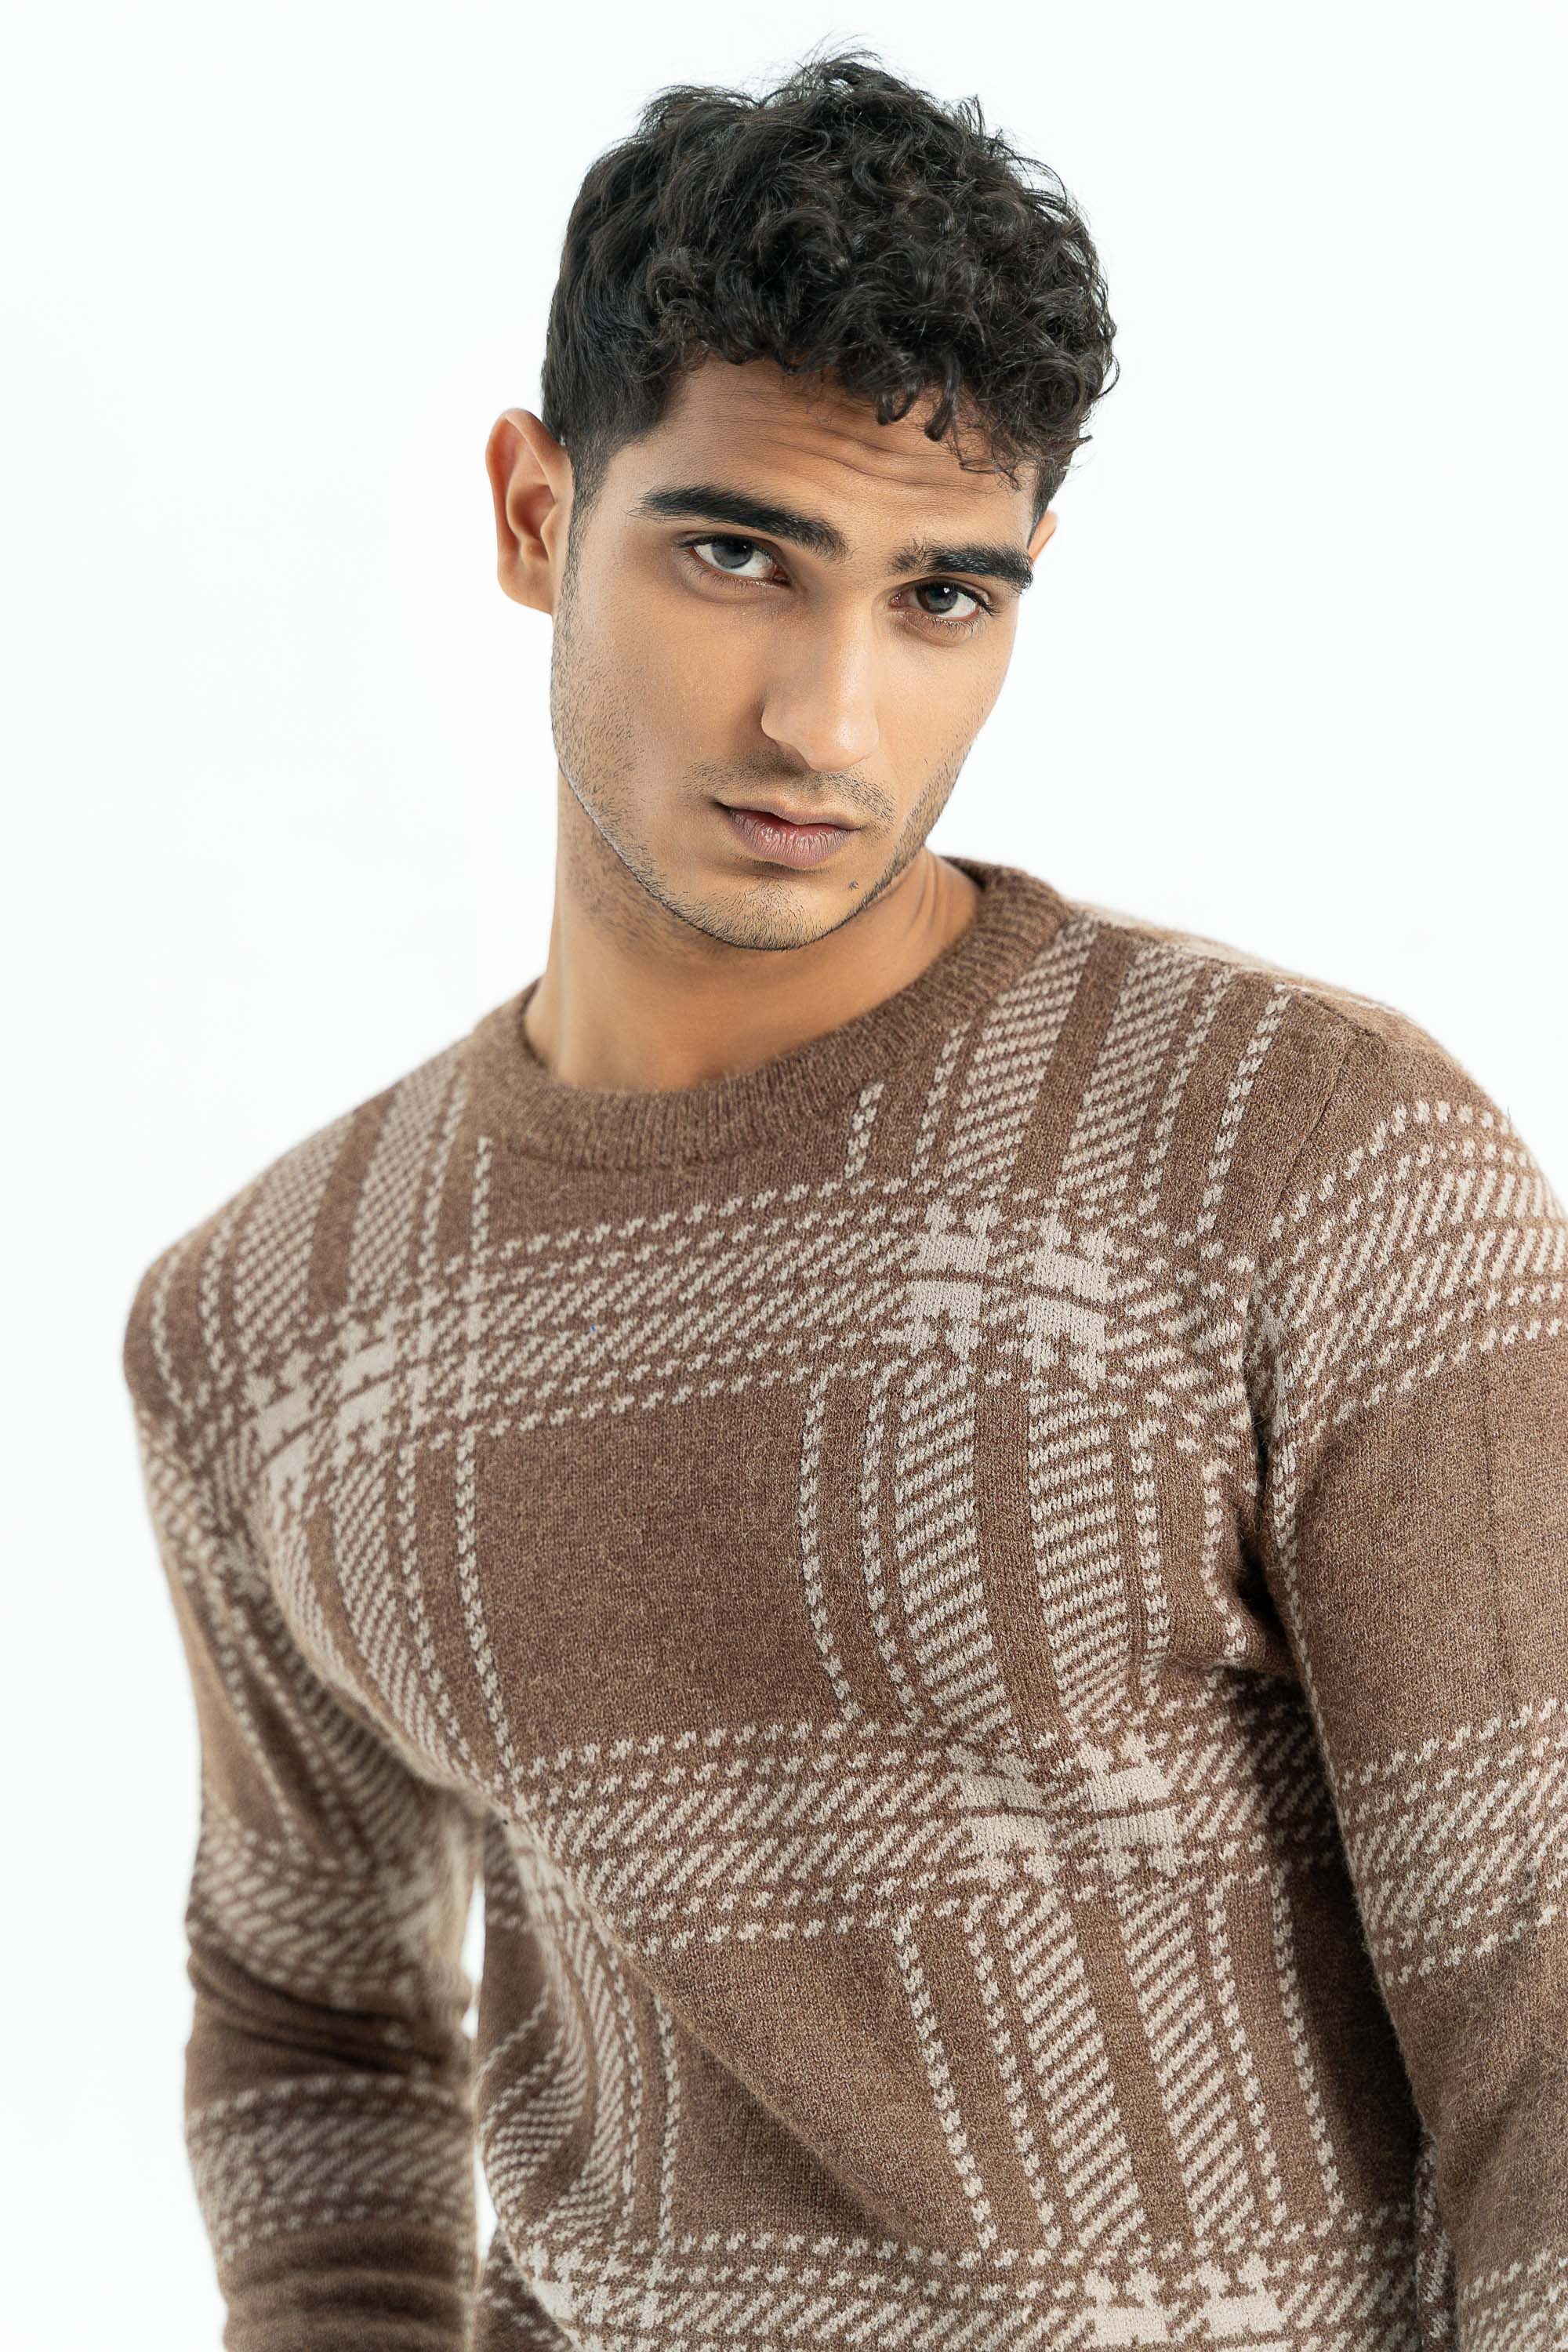 Brown sweater